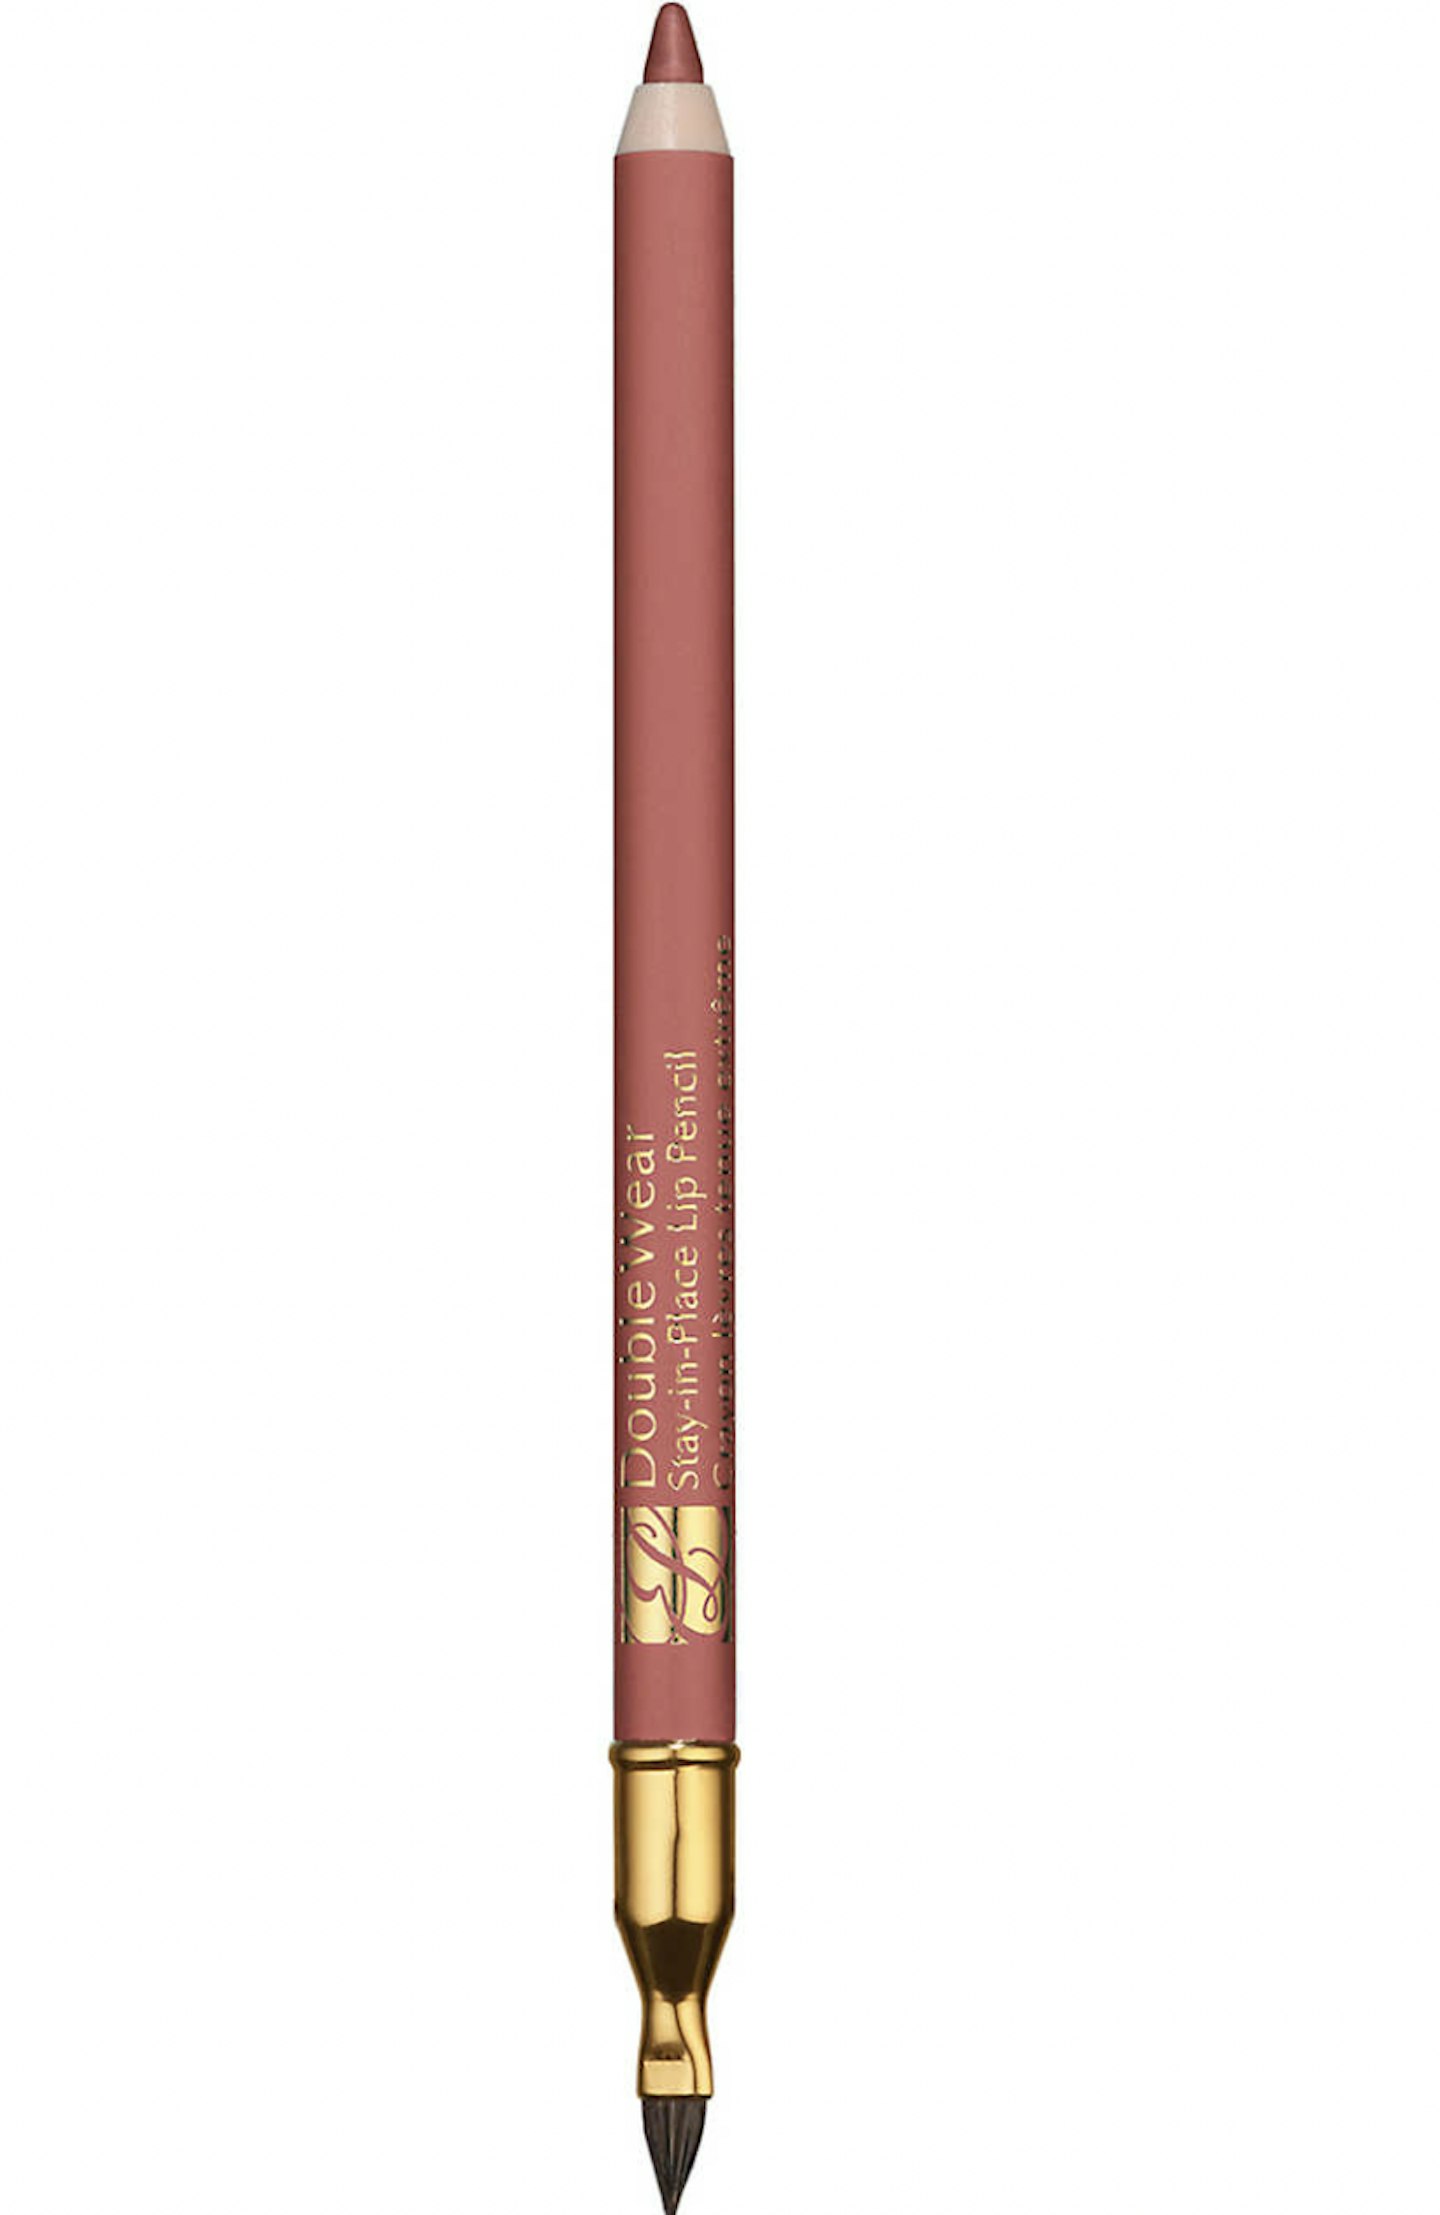 Estu00e9e Lauder Double Wear Lip Pencil, £19